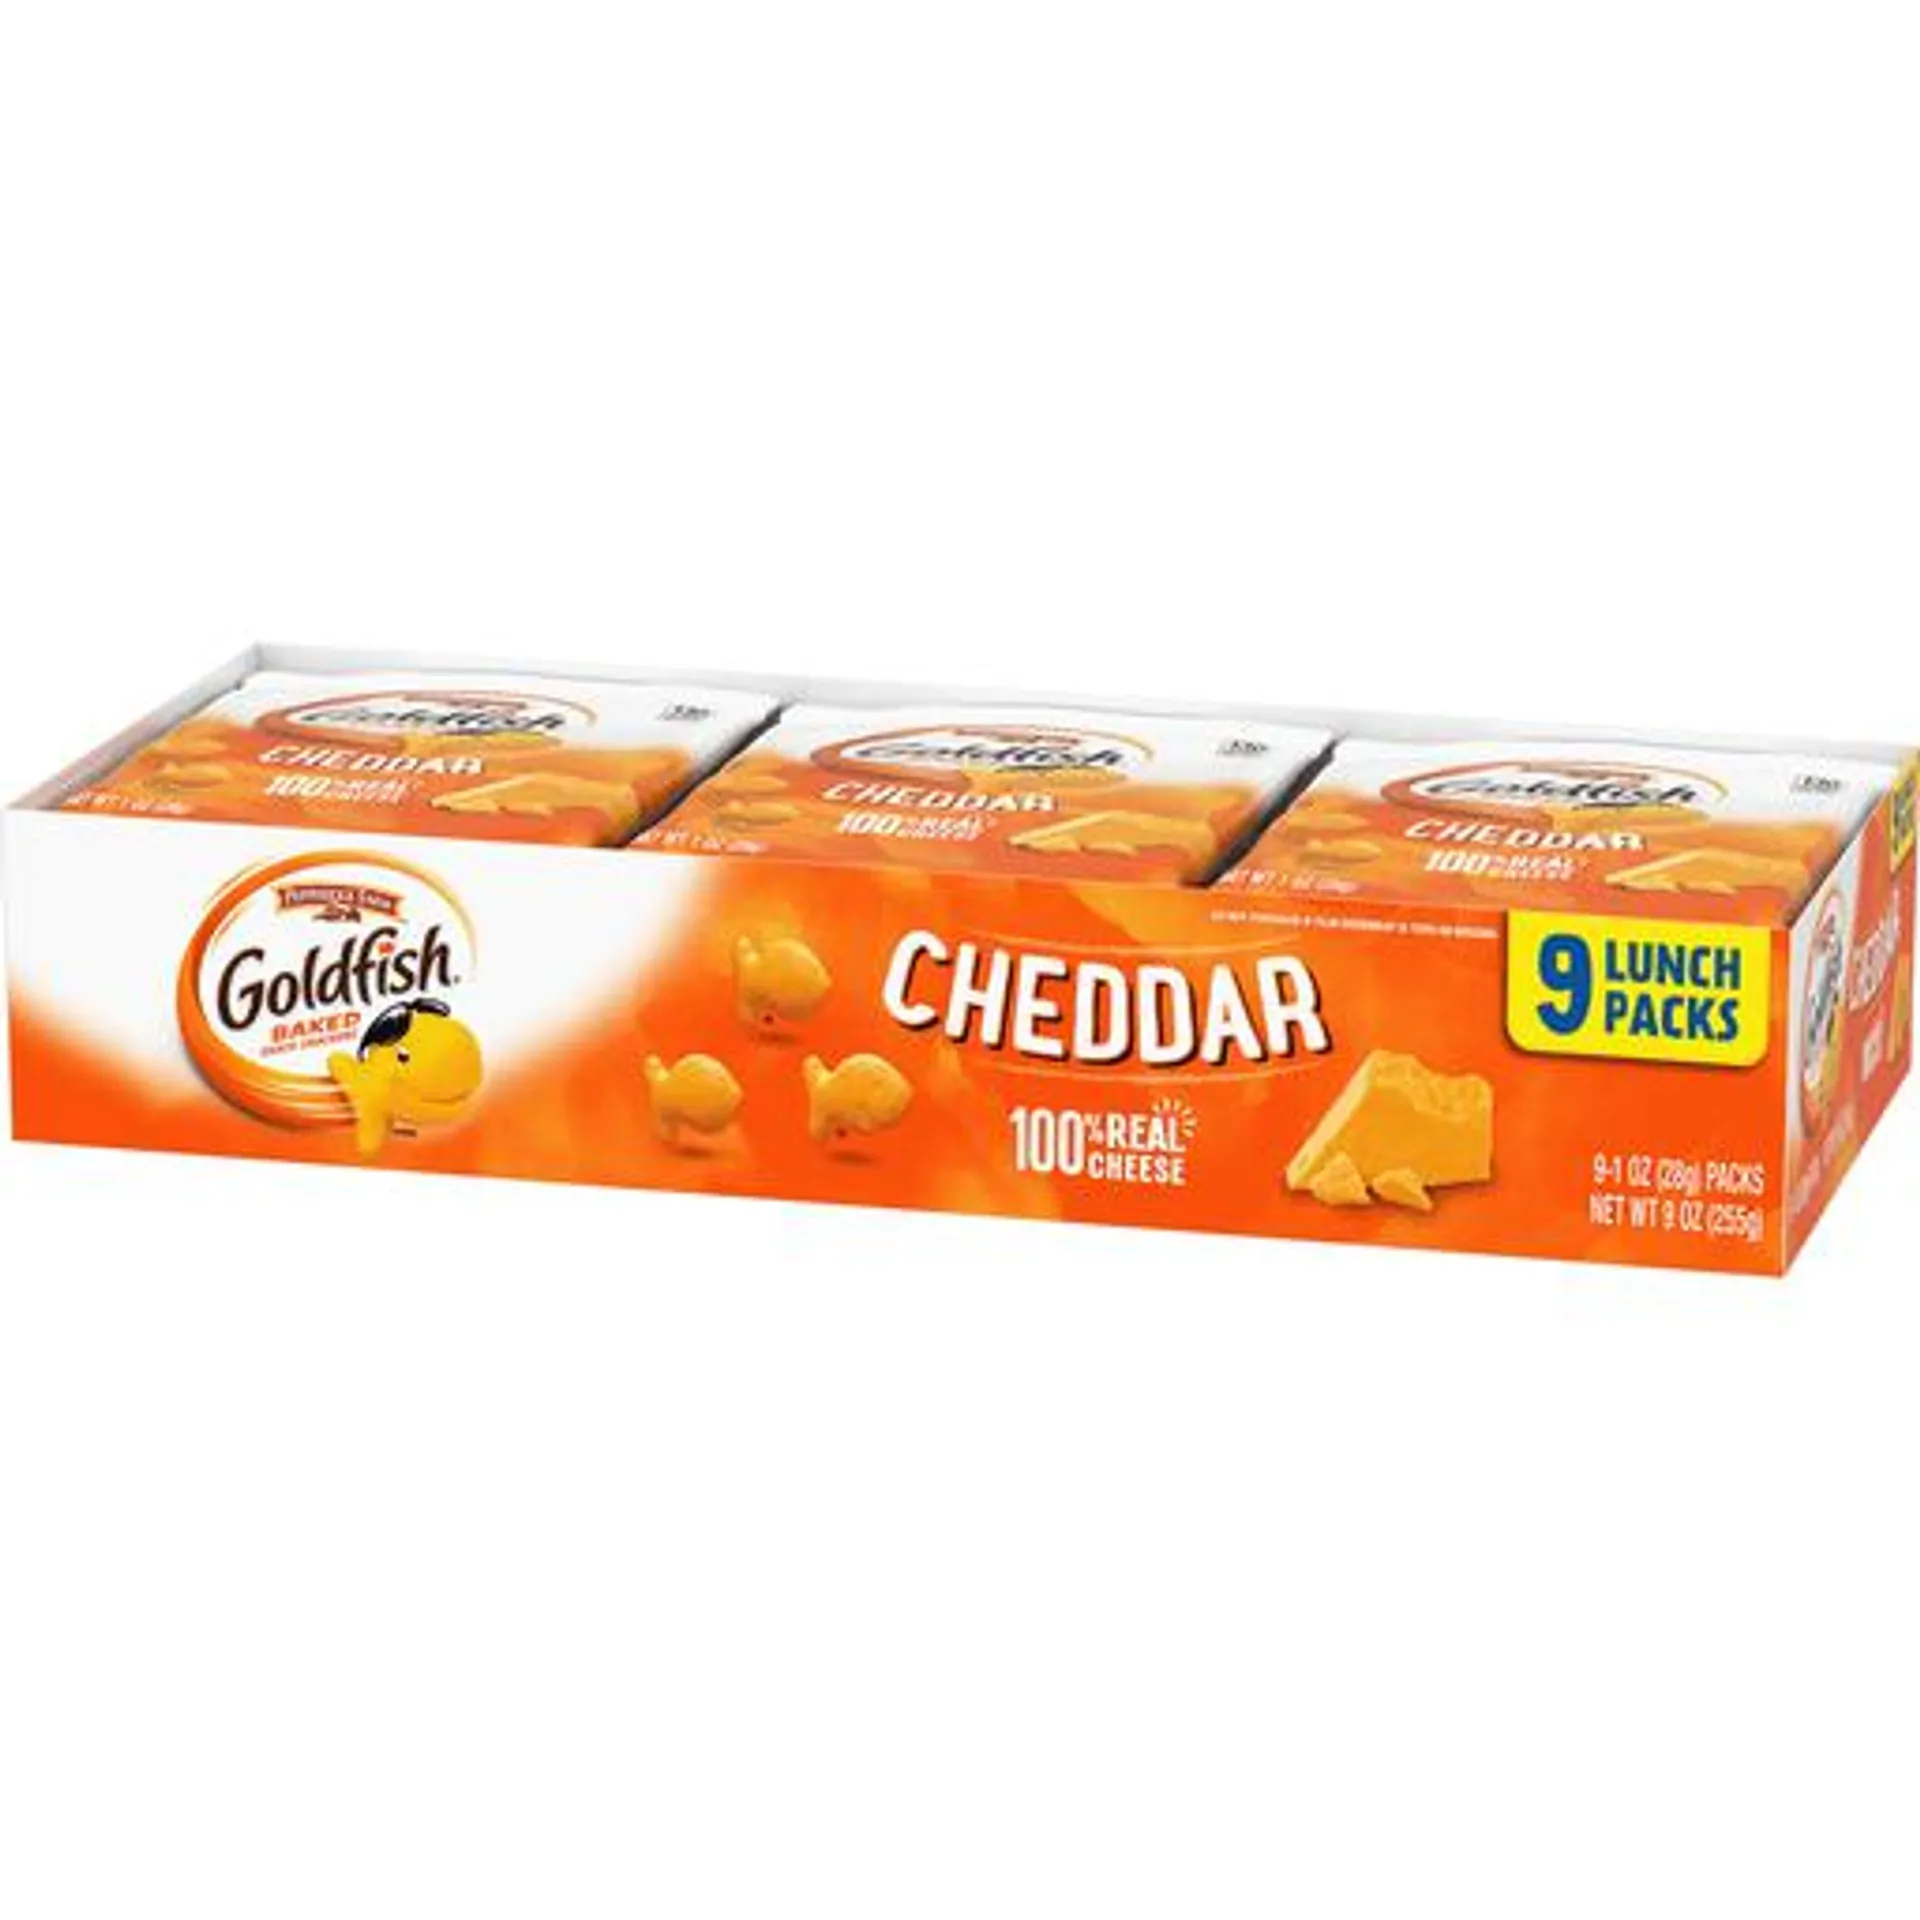 Pepperidge Farm Goldfish Cheddar Baked 9 Lunch Packs Snack Crackers 1 oz bag 9 ct